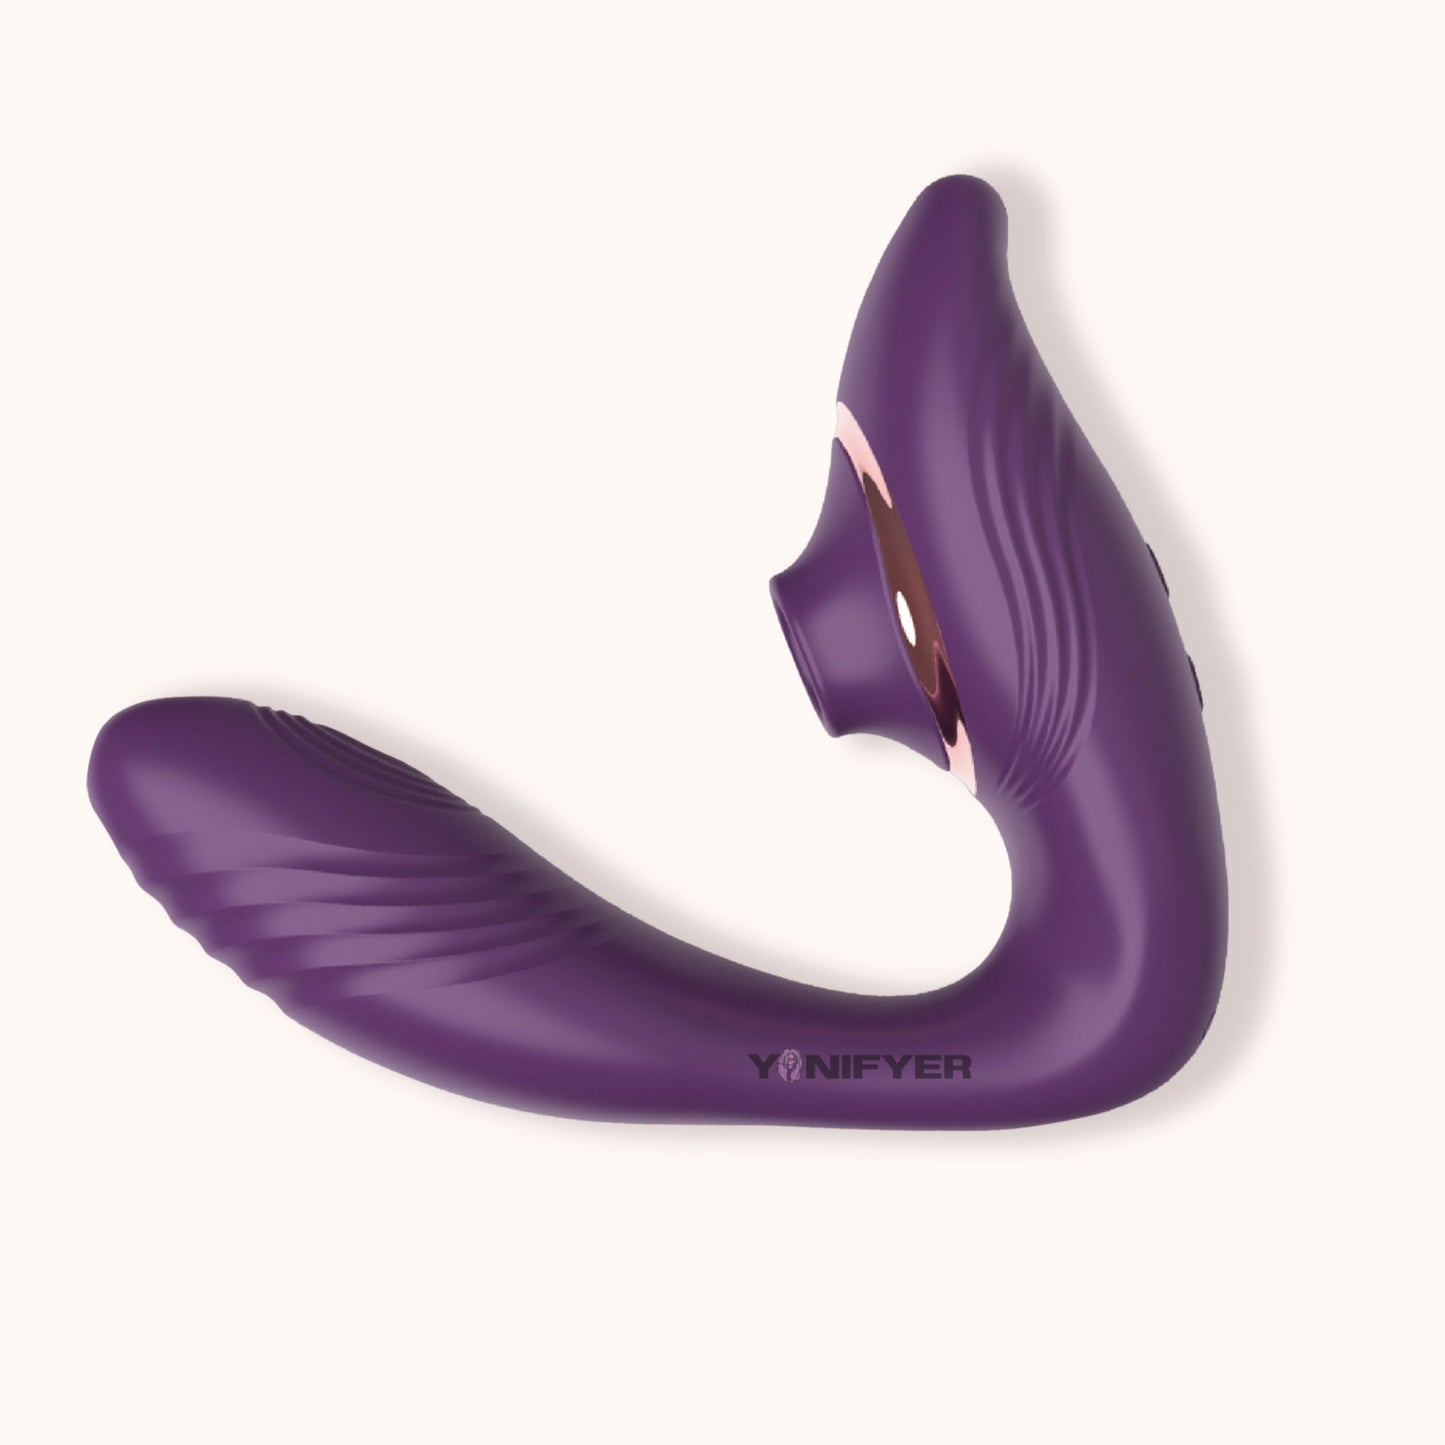 Yonifyer - Yonifyer Luchtdruk Vibrator | Clitoris + G-spot stimulator - Yonifyer